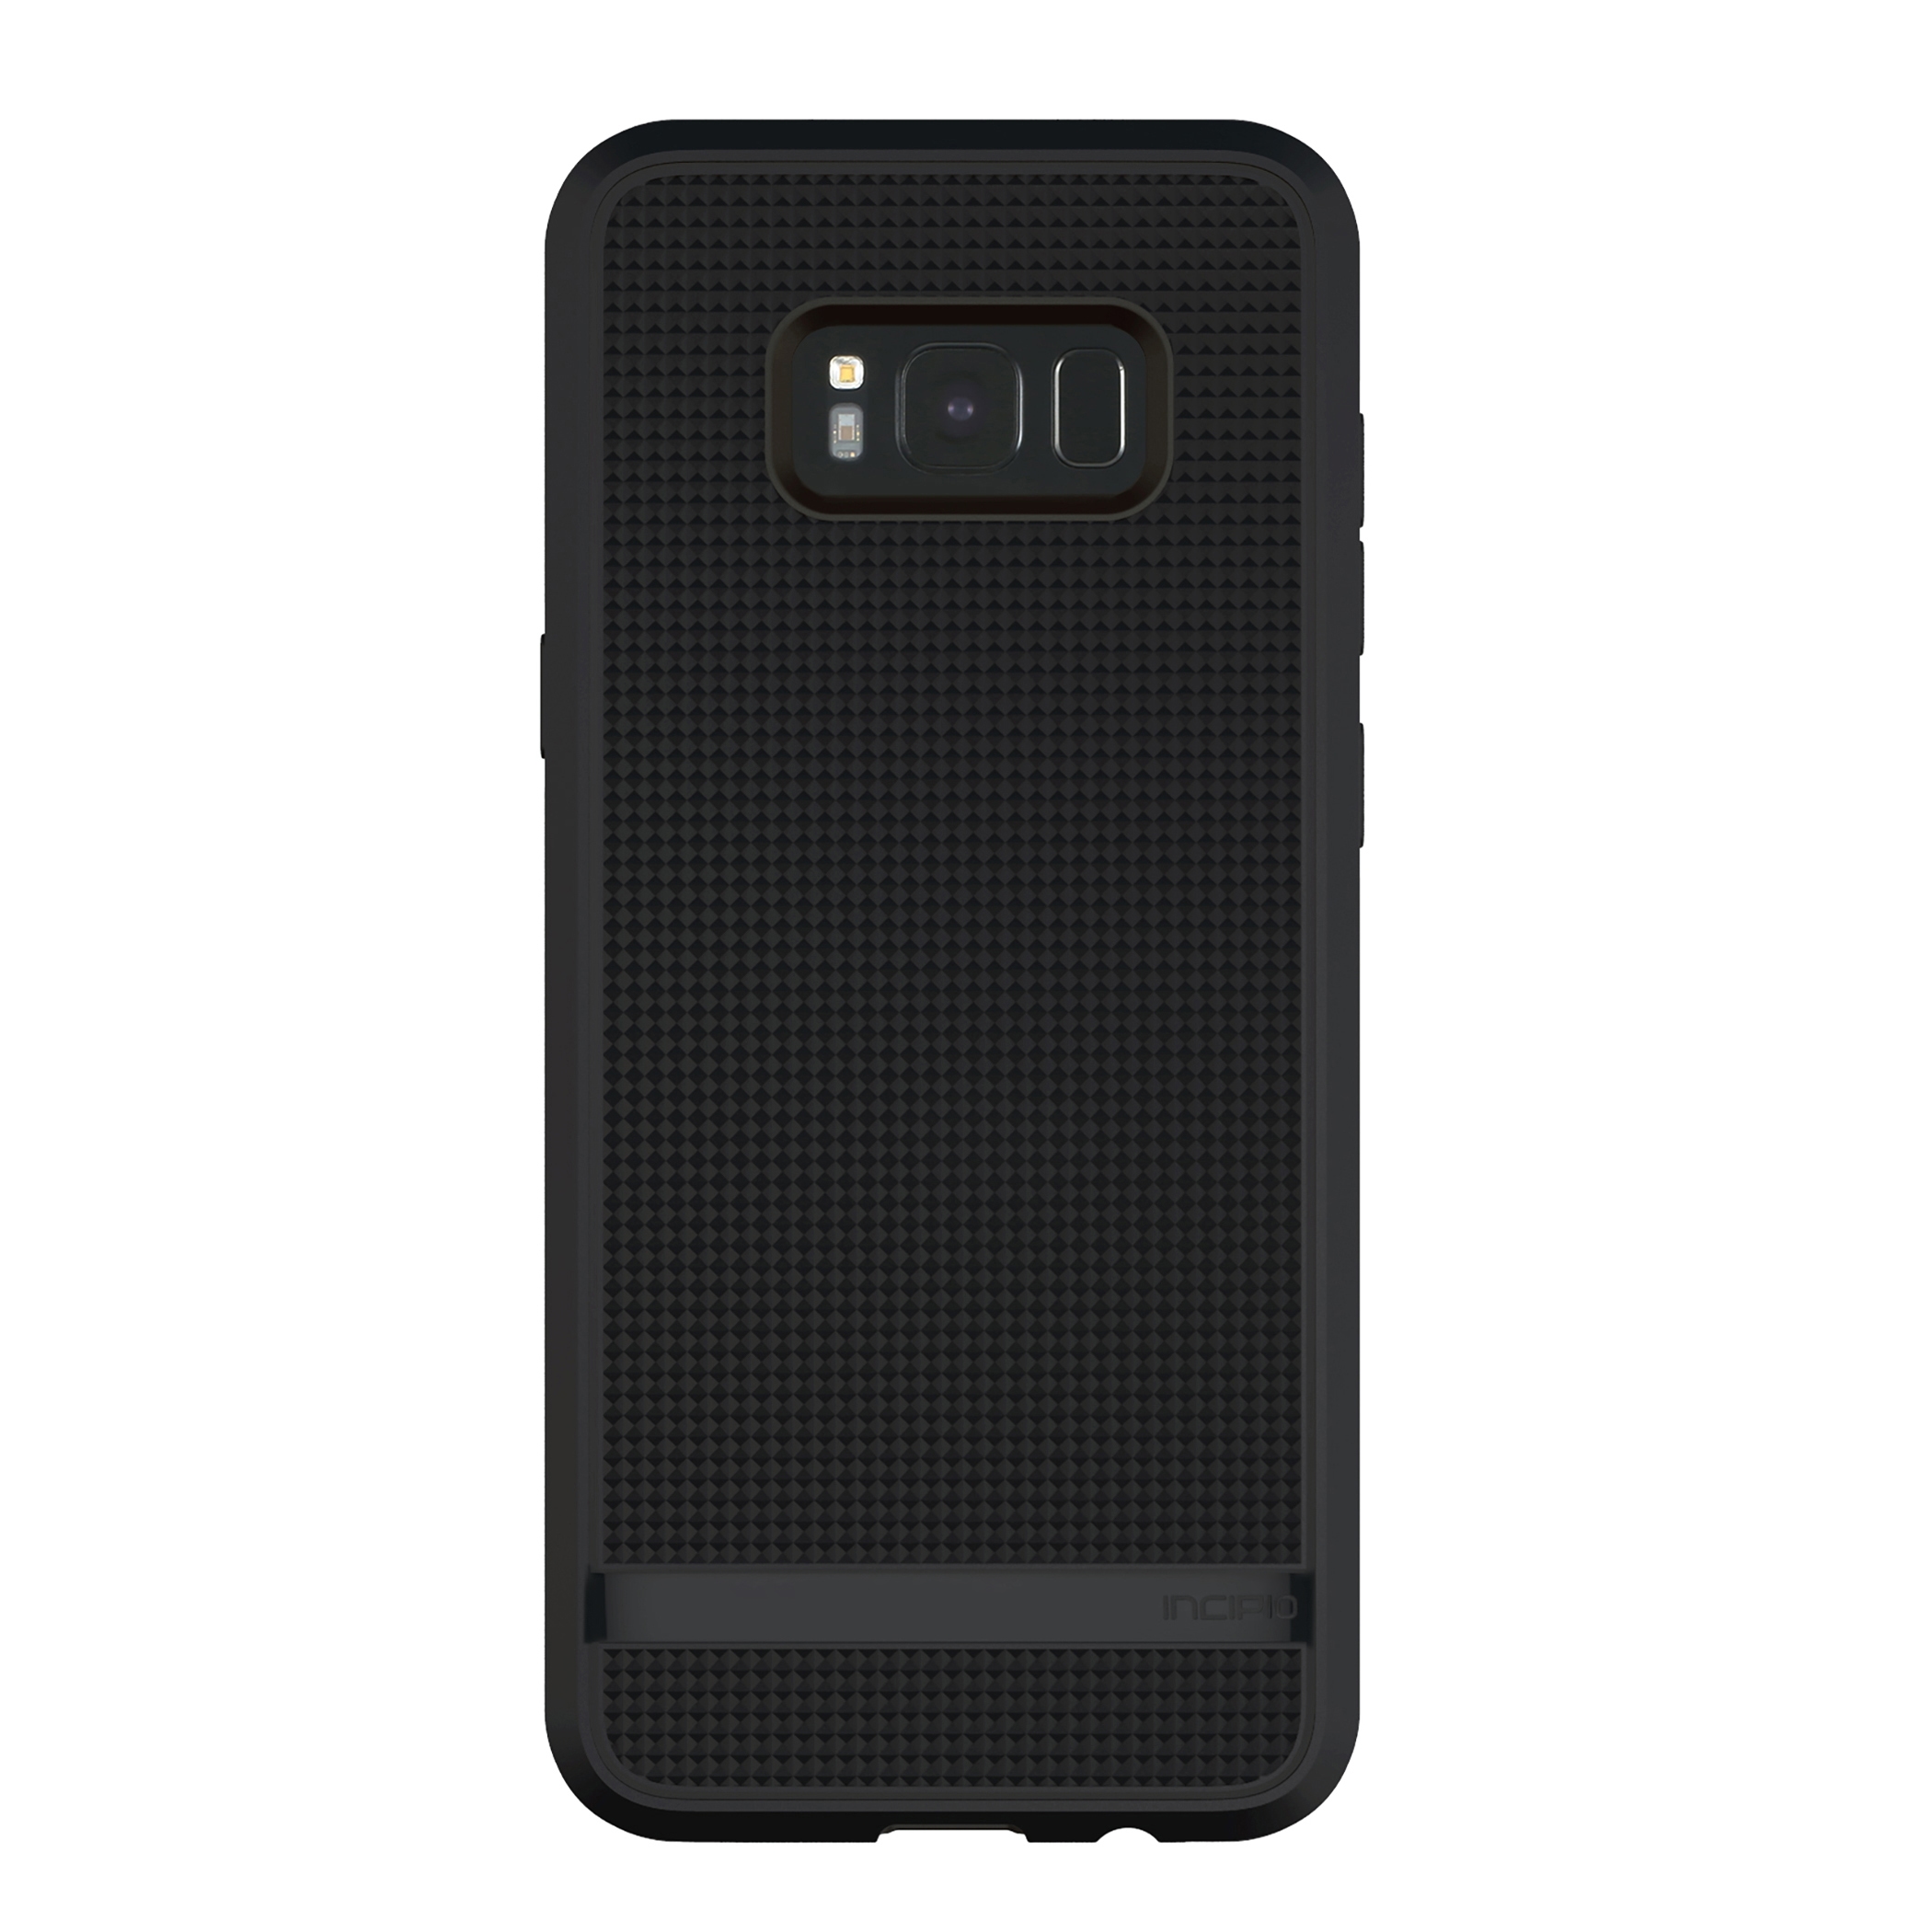 Thumbnail image of Incipio NGP Advanced for Galaxy S8+, Black